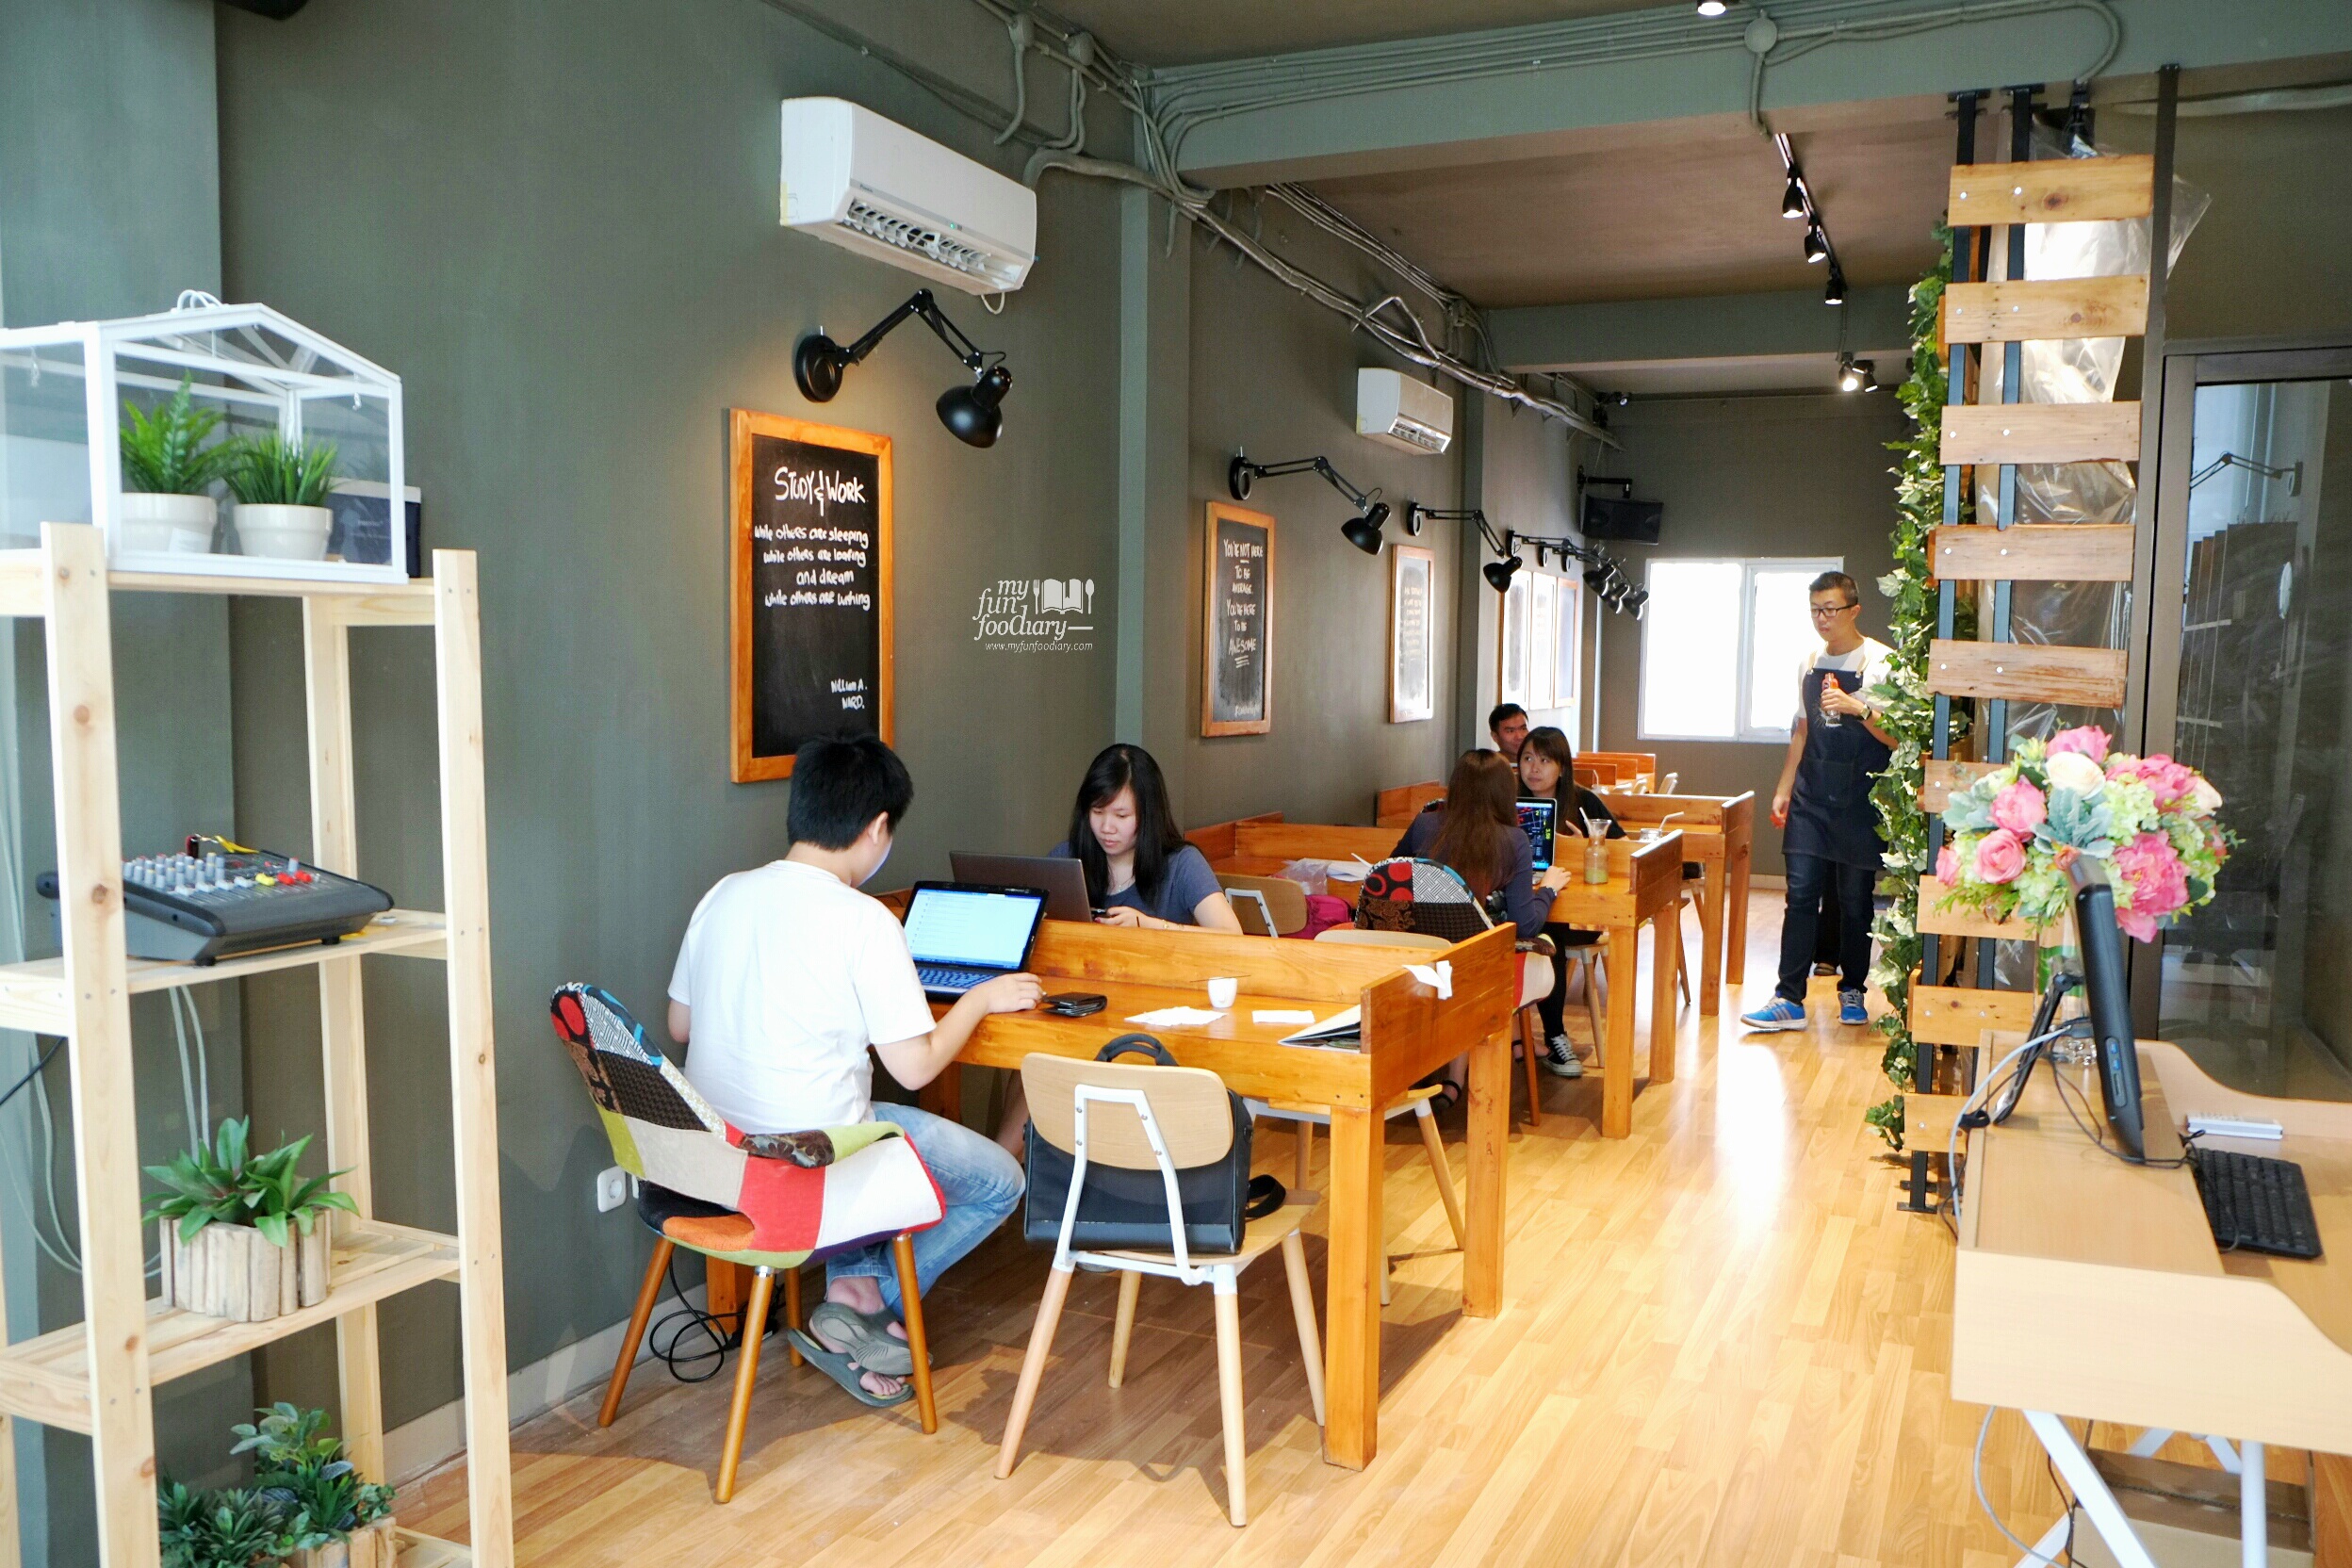 Area Study Lounge at Cafetaria Study Lounge by Myfunfoodiary